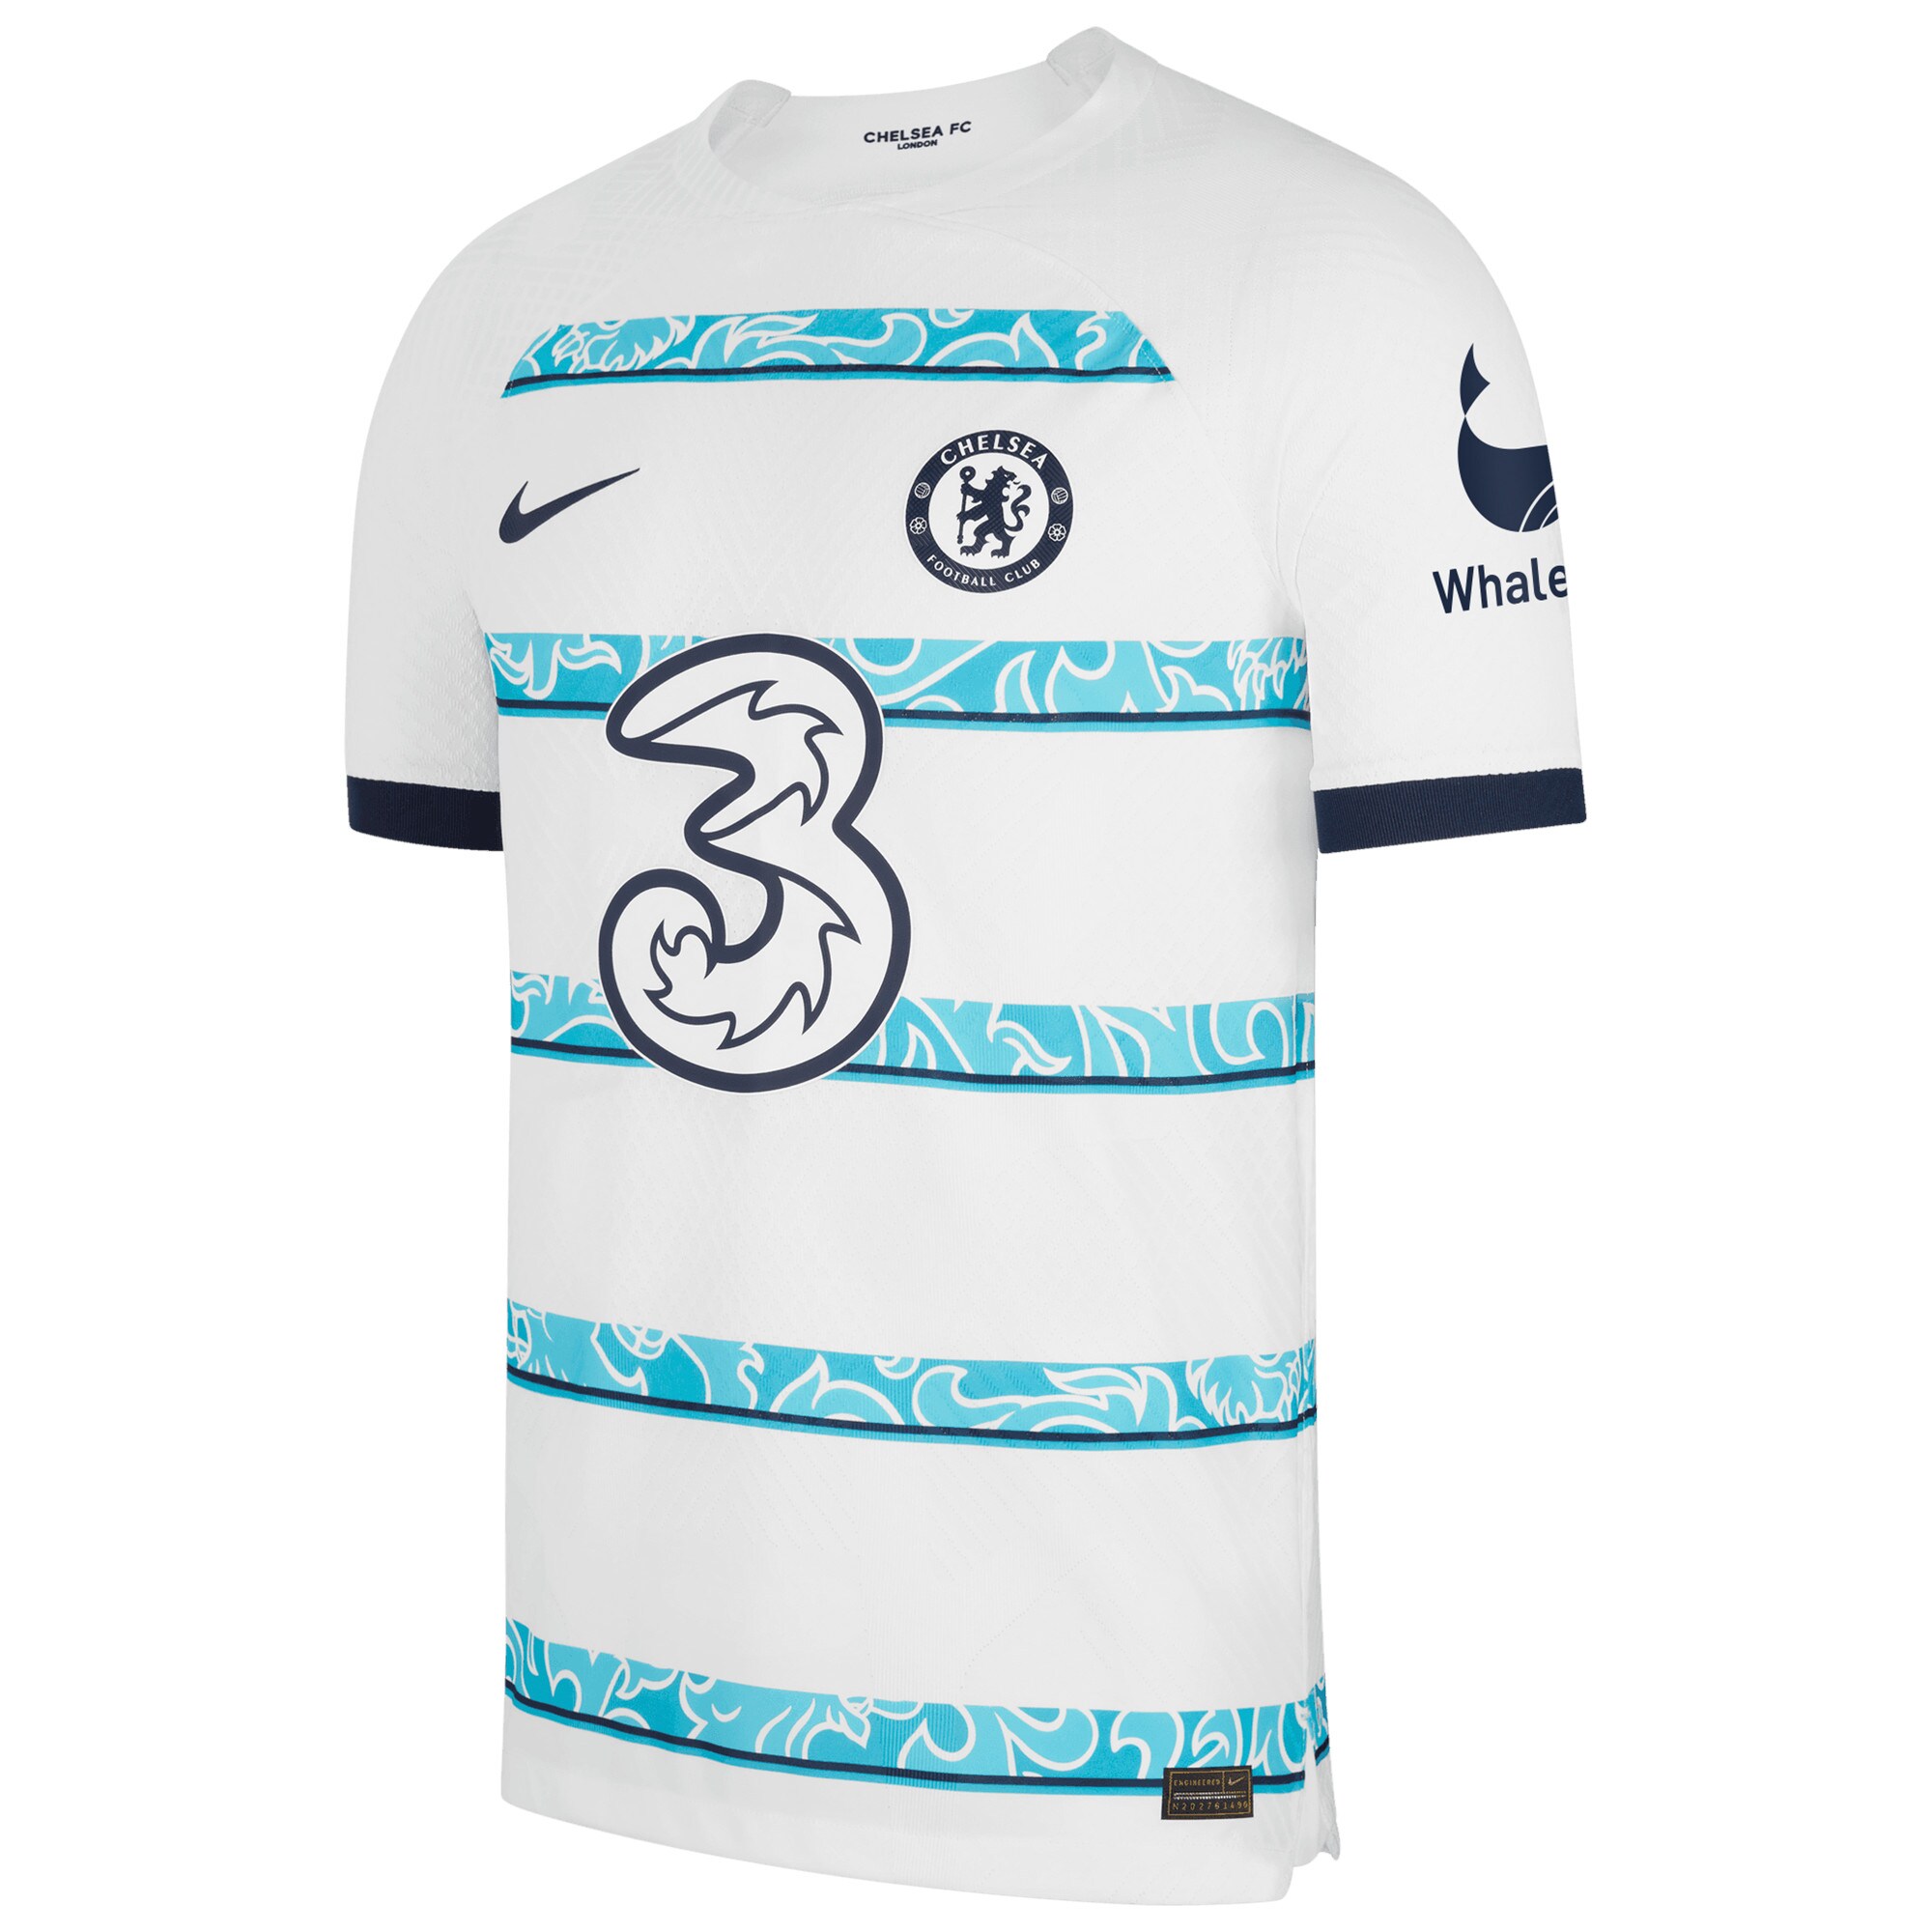 Chelsea Away Vapor Match Shirt 2022-23 with Enzo 5 printing